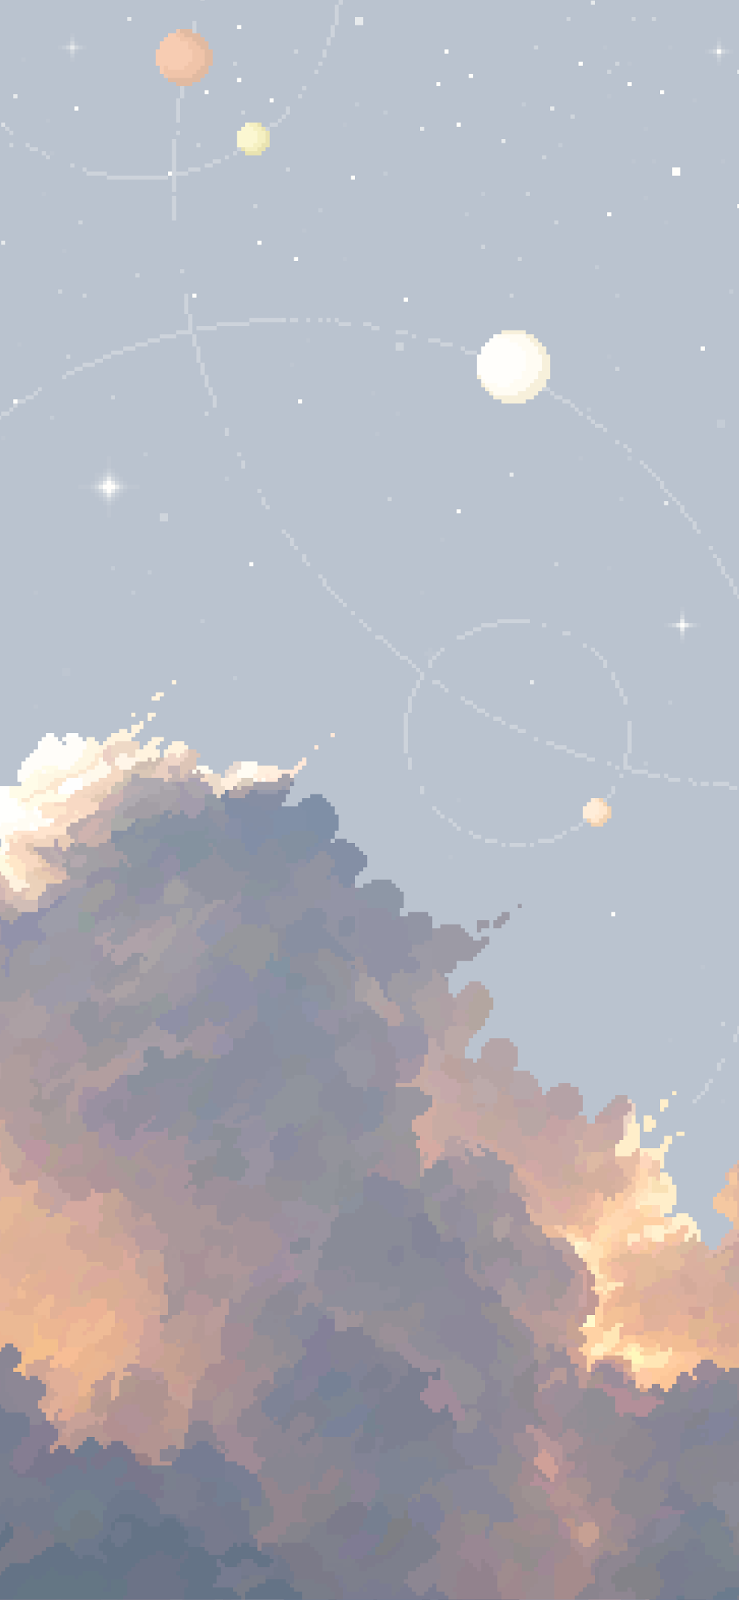 Sky, Pixel Art, Digital Art, iPhone Wallpaper Background